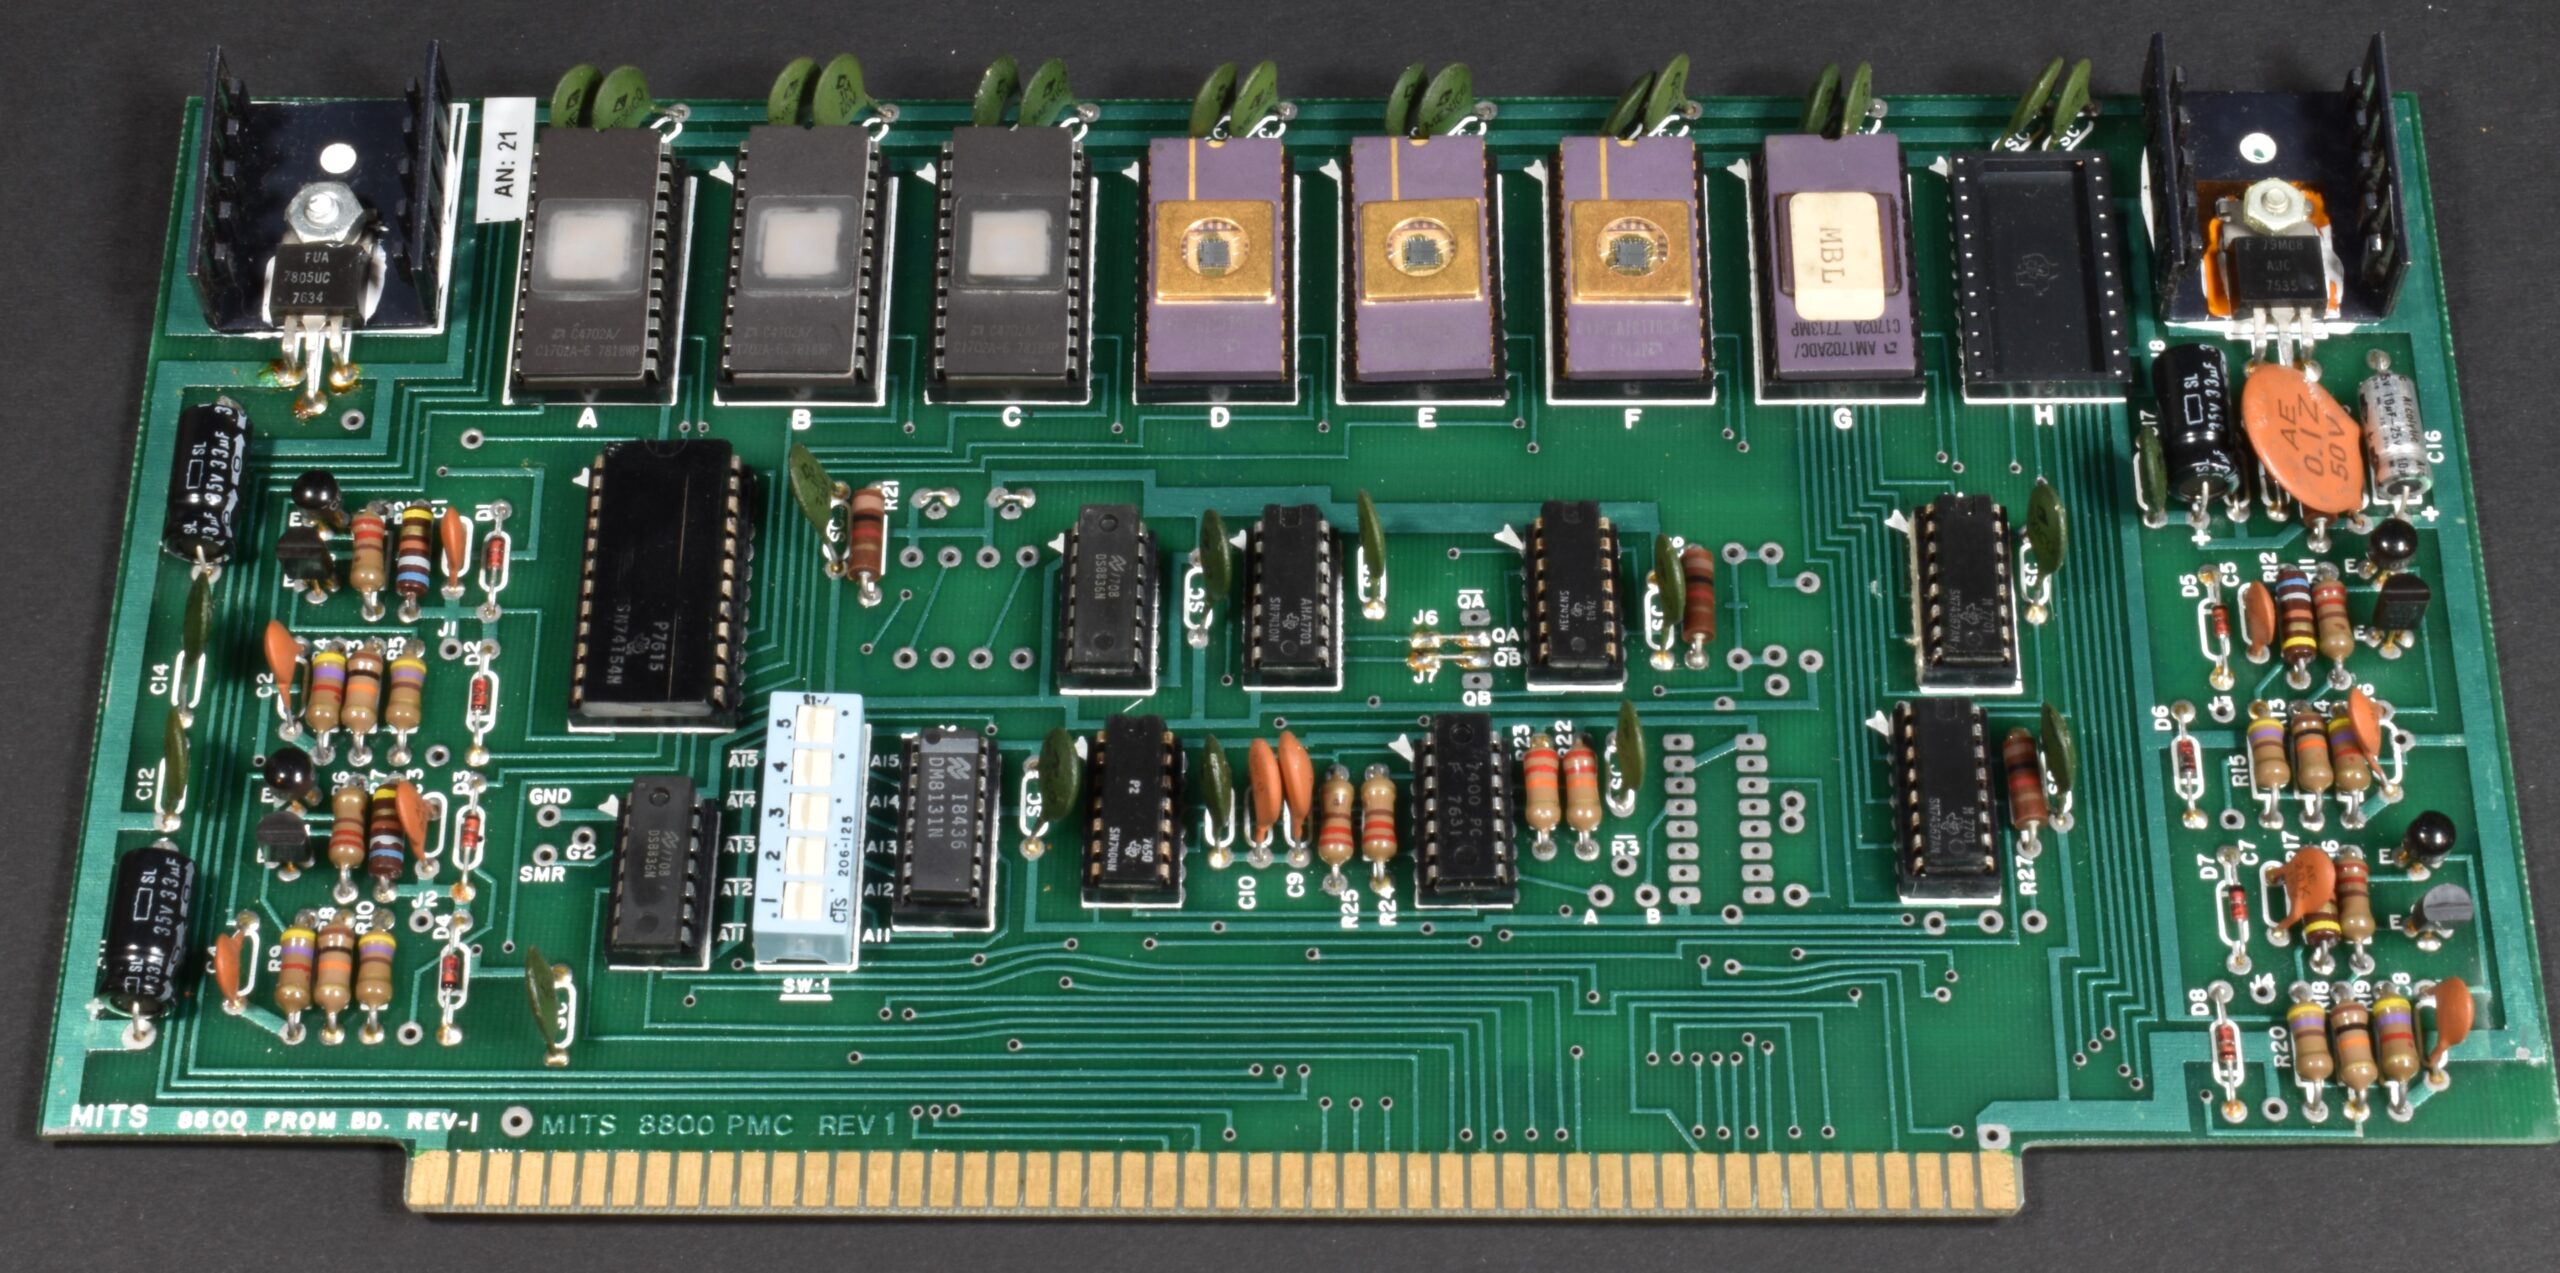 MITS 8800-PMC-image